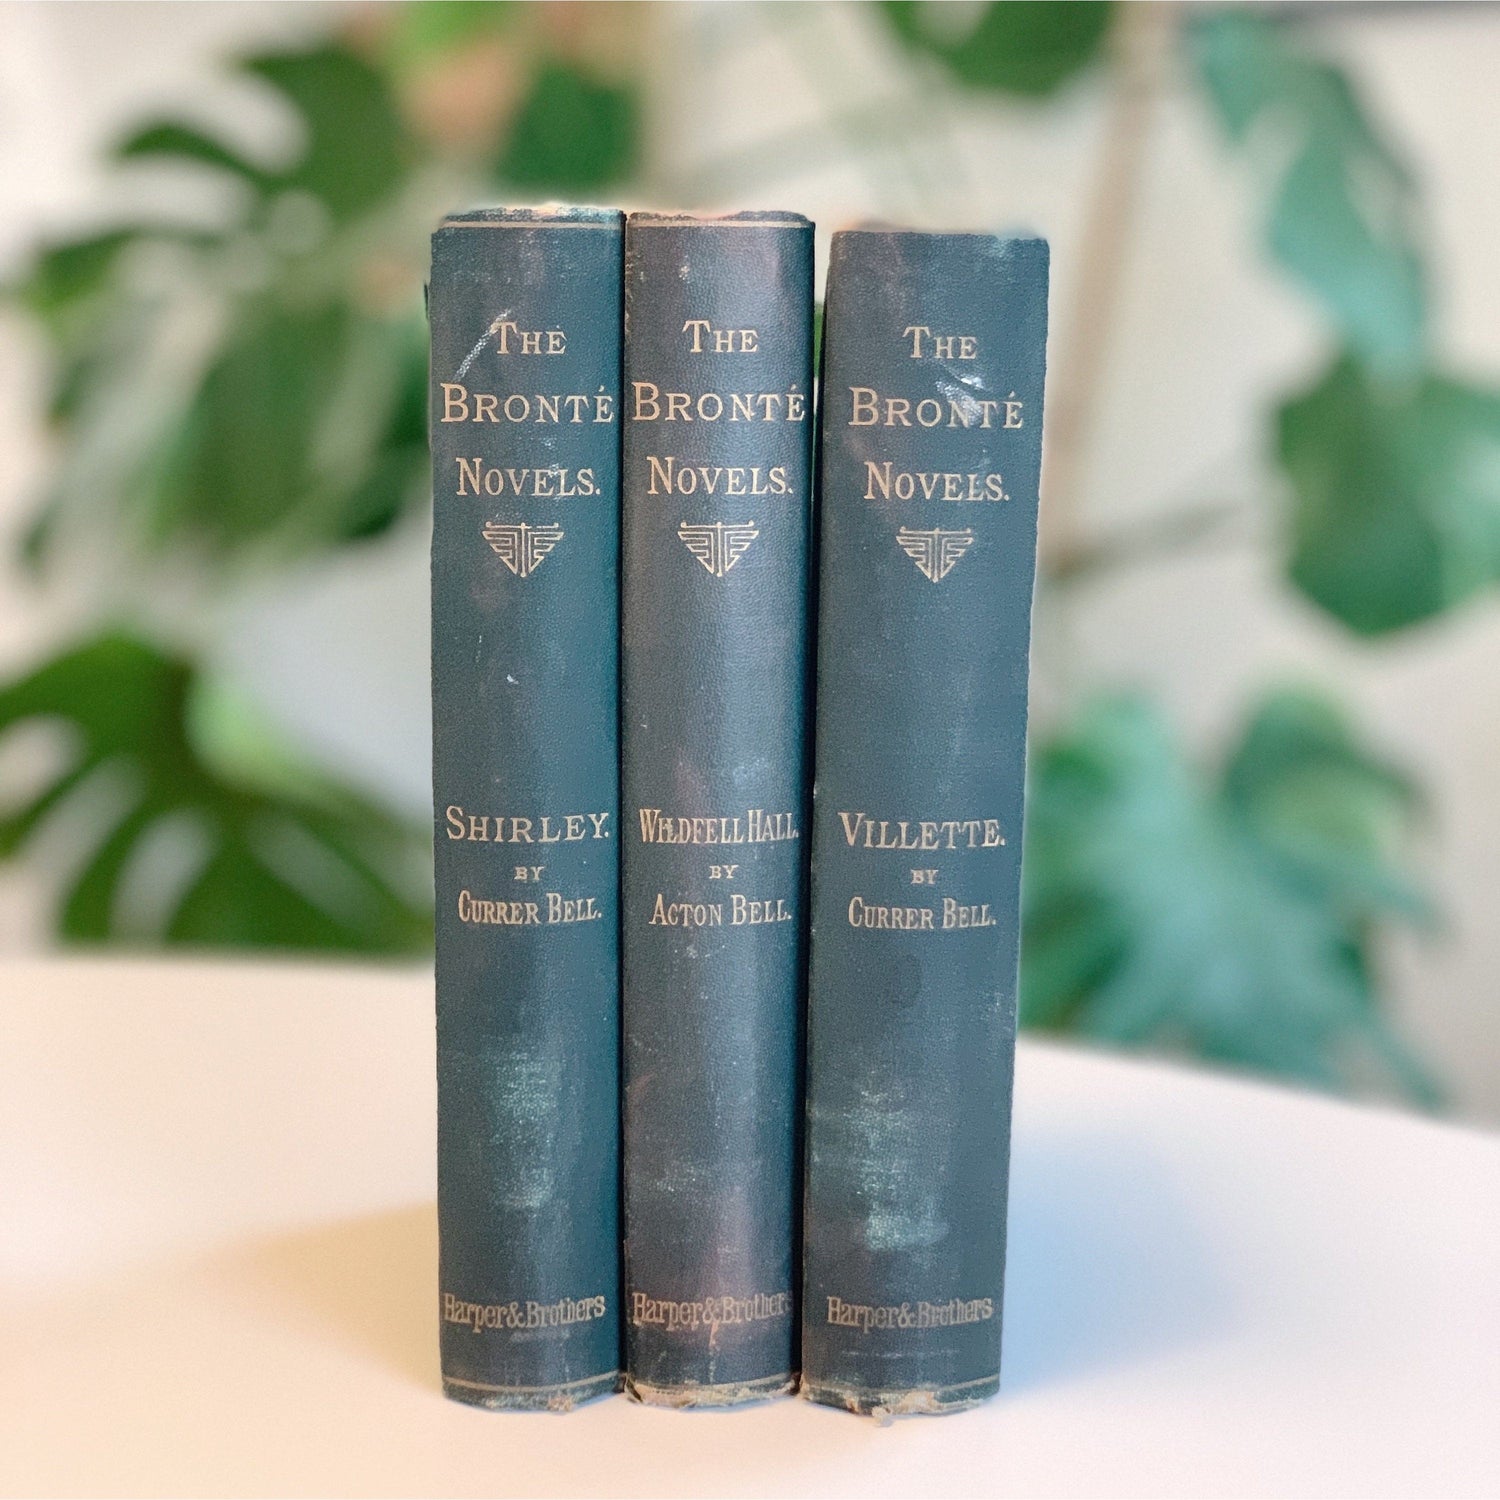 The Bronte Novels, Harper & Brothers, 1870s, Antique Green Book Set